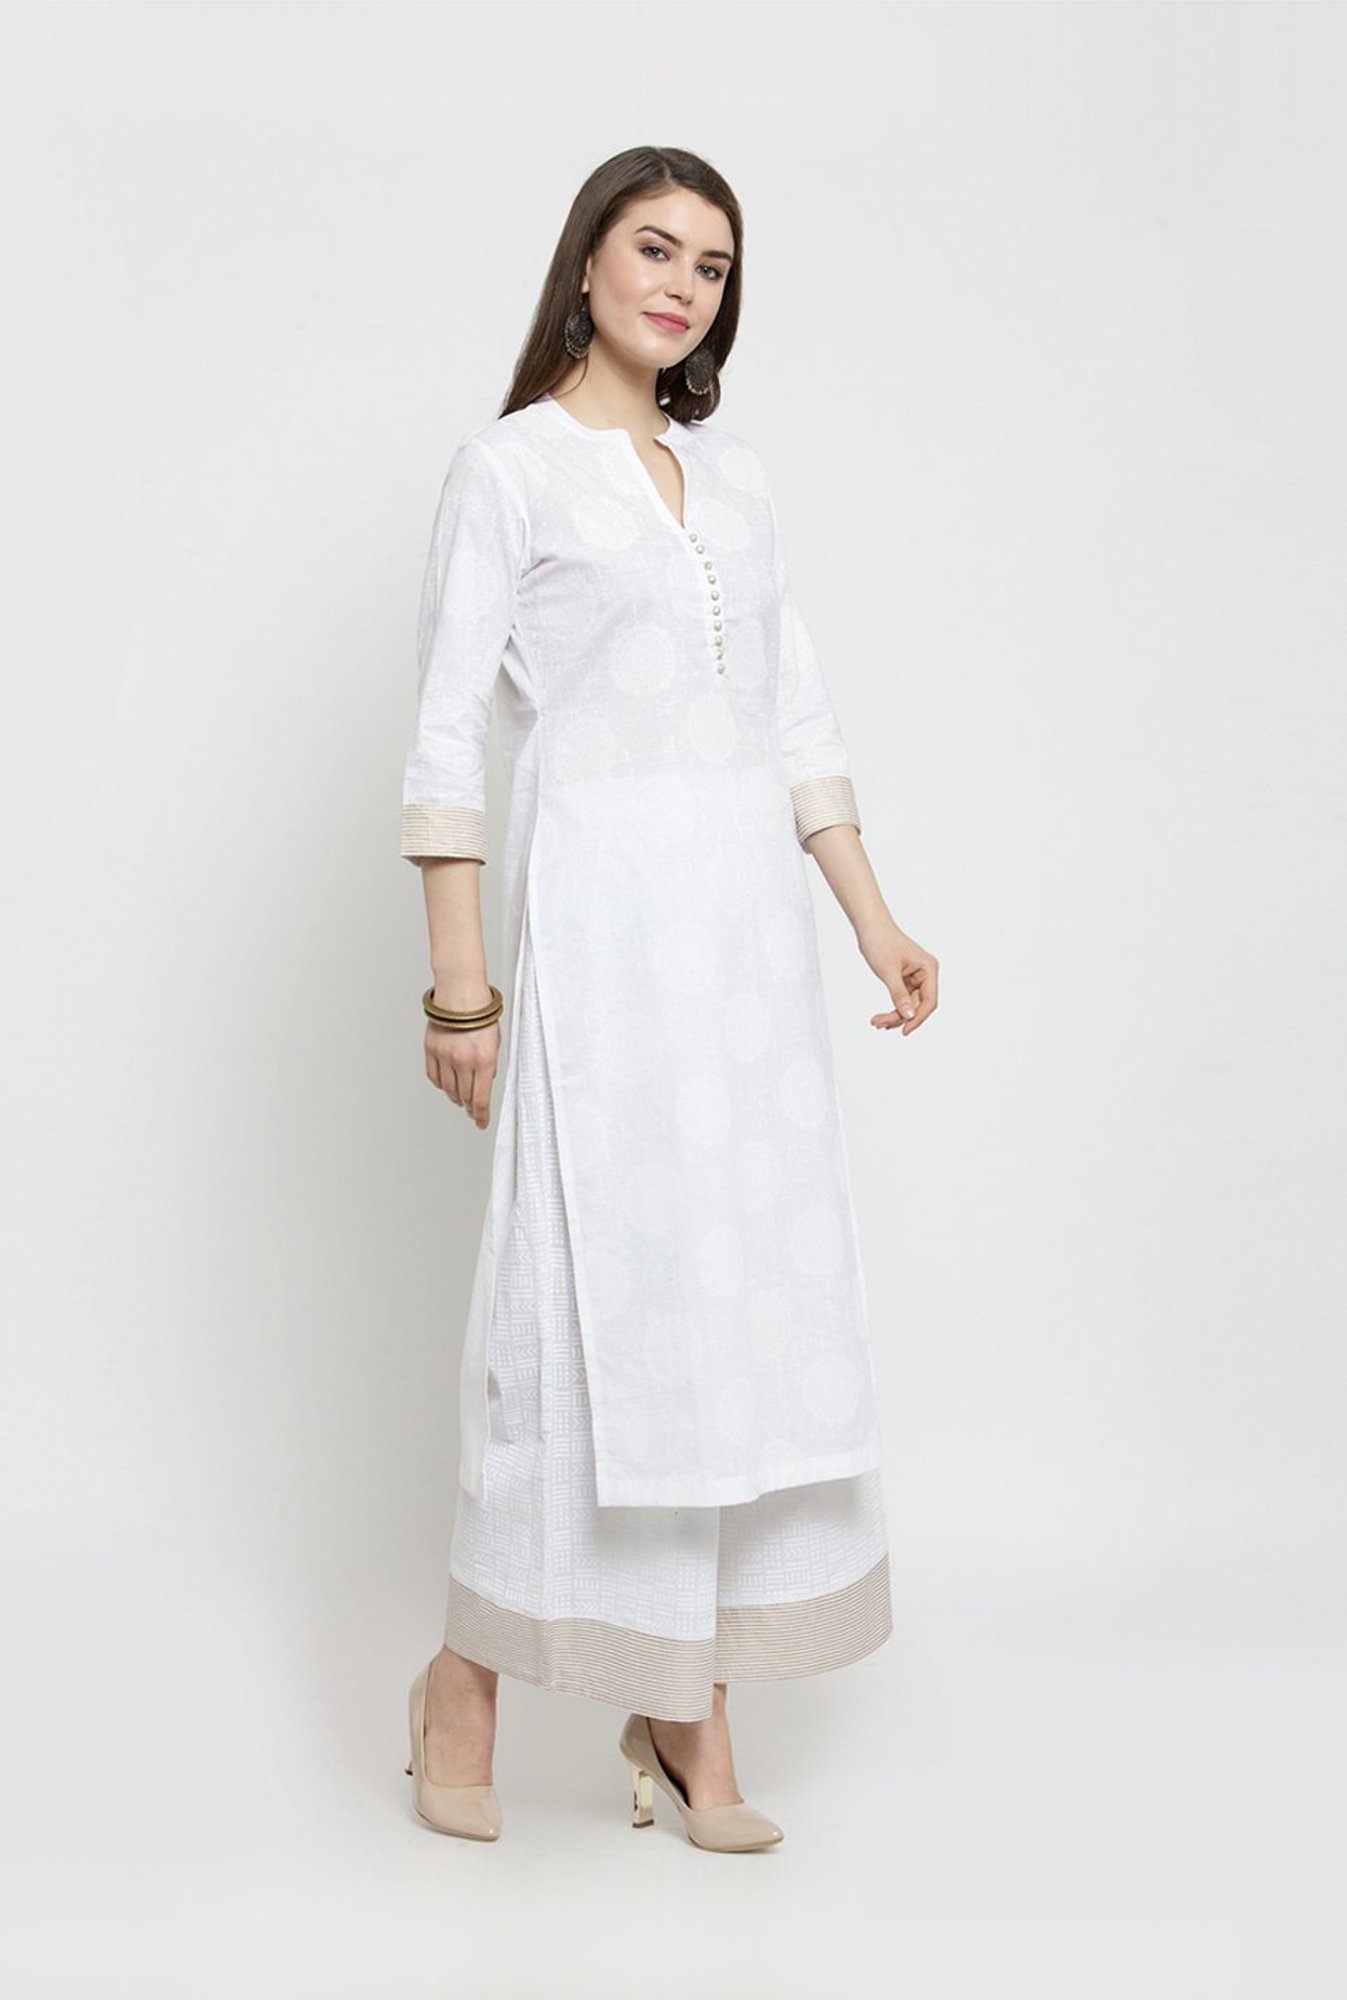 Buy Sritika Women White Solid Straight Kurti Online at 50% off. |Paytm Mall